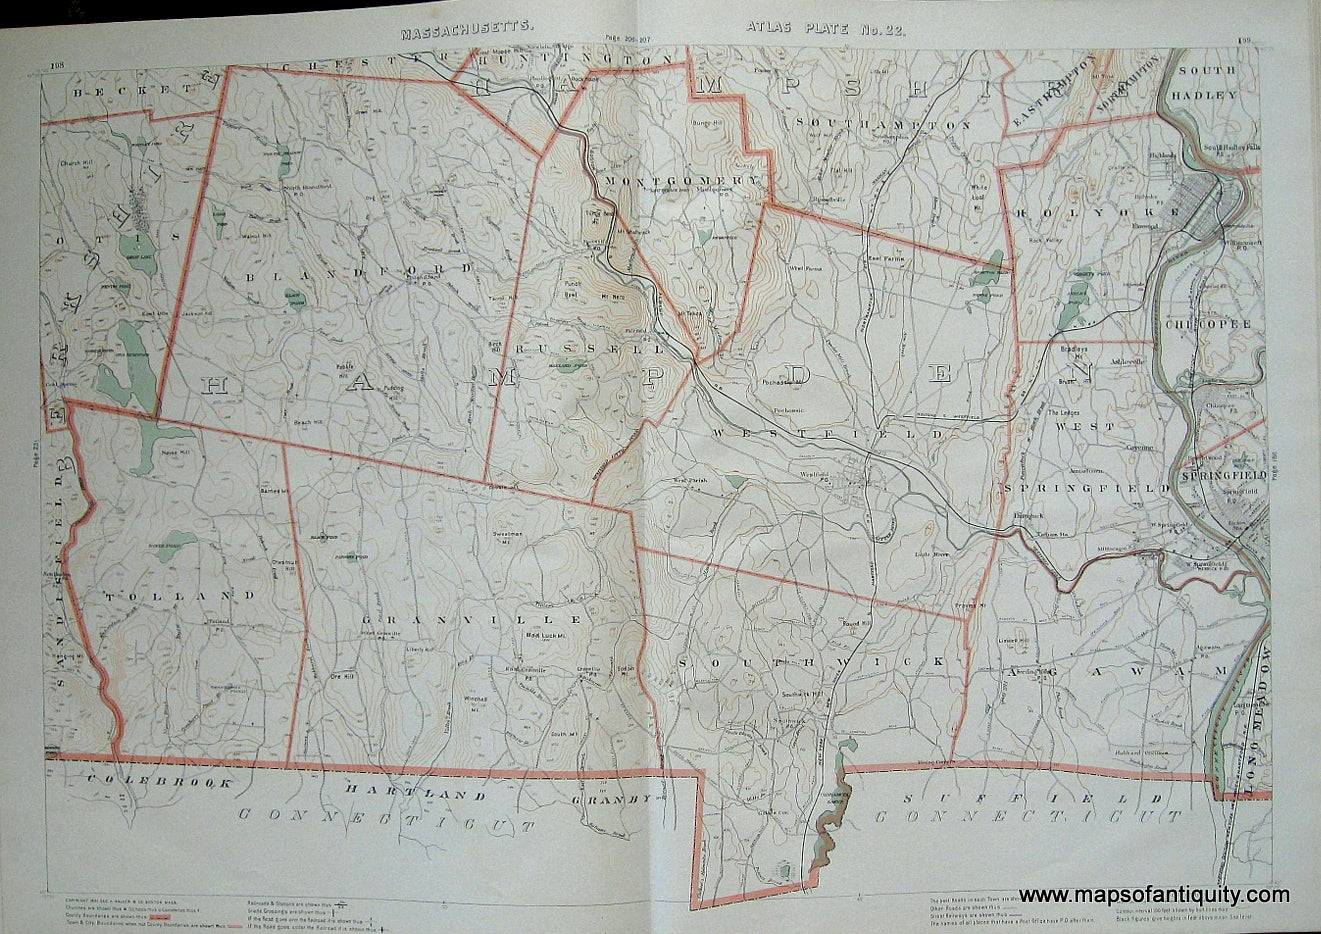 Antique-Printed-Color-Map-Massachusetts-Atlas-Plate-No.-22-US-Massachusetts-Massachusetts-General-1891-G.-H.-Walker-Maps-Of-Antiquity